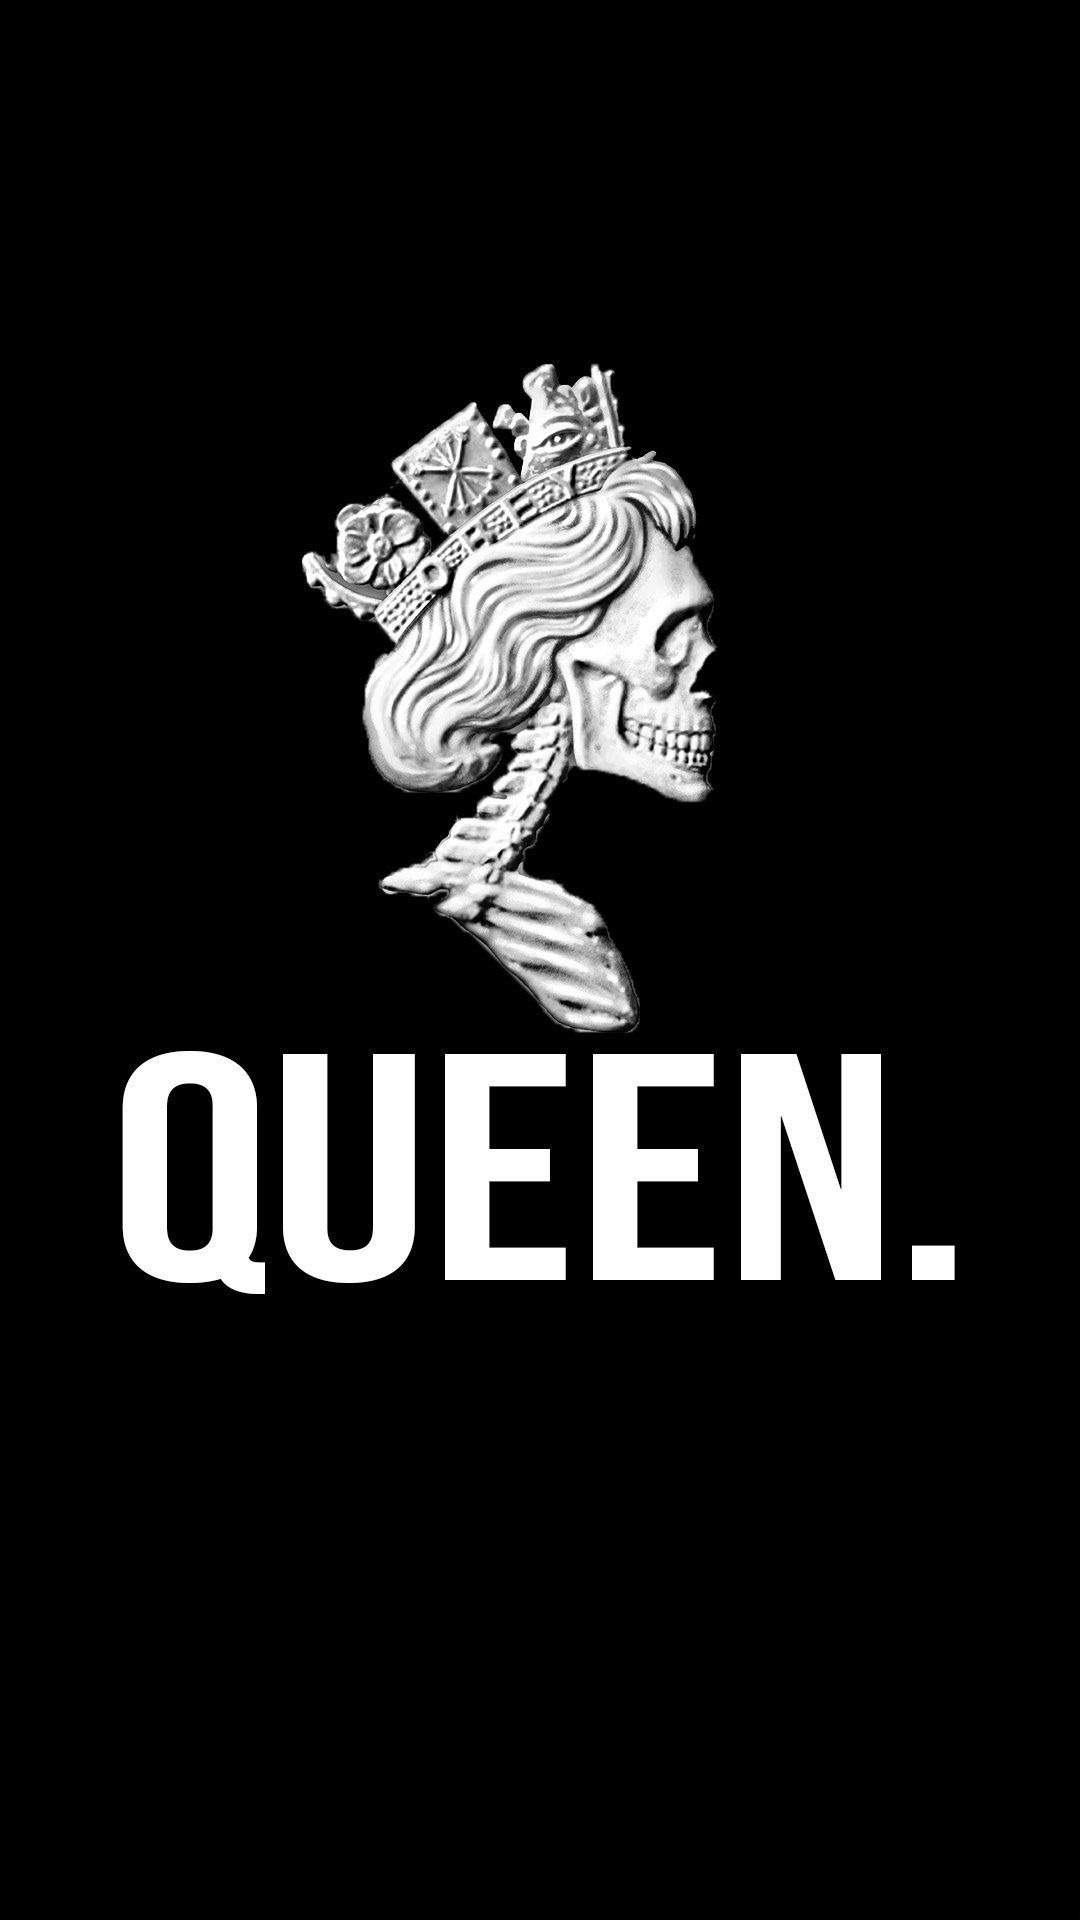 Black Queen - Lady Skull Wearing Crown